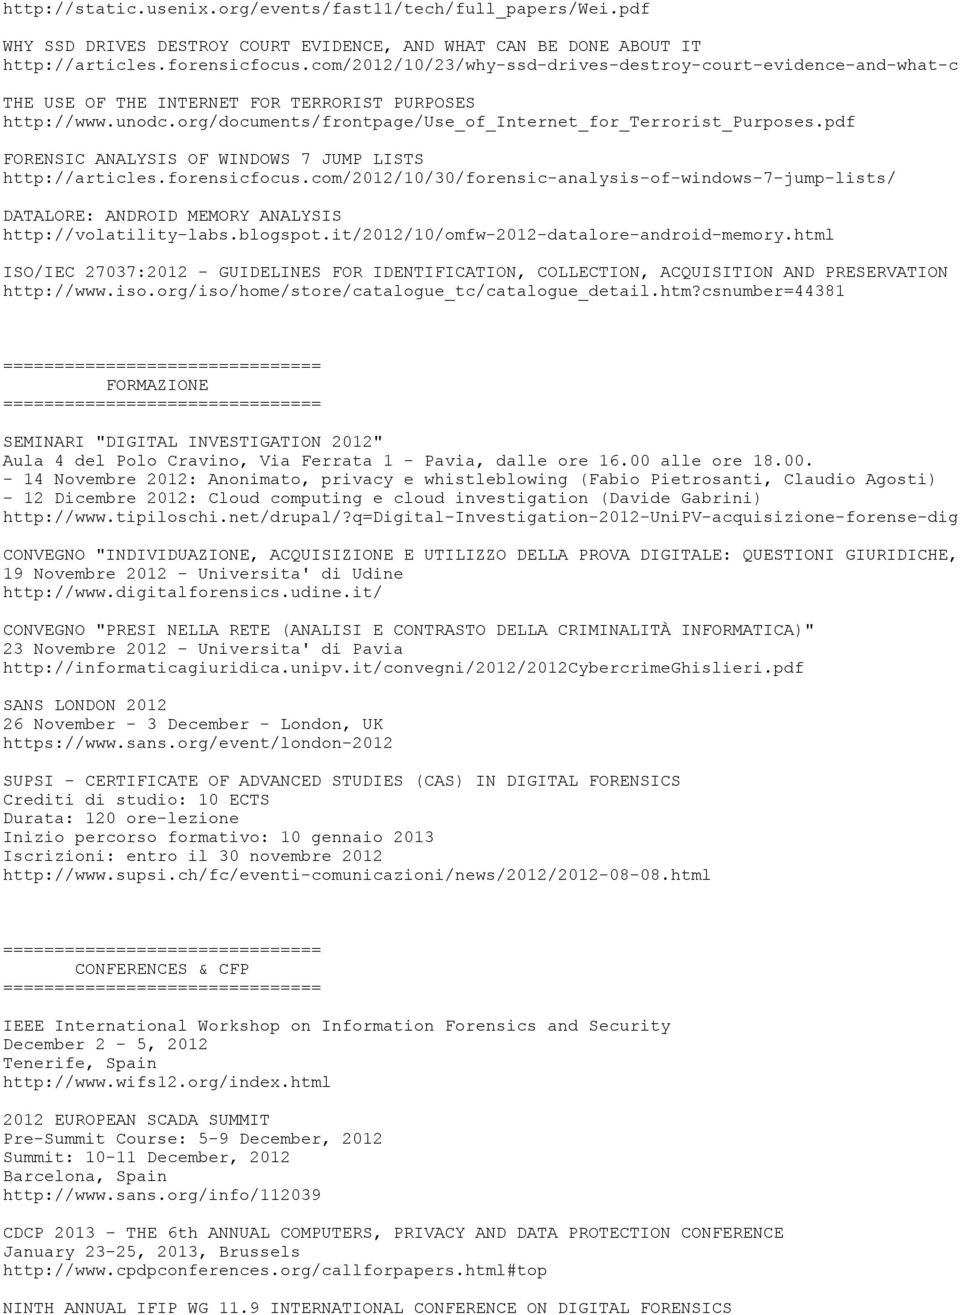 pdf FORENSIC ANALYSIS OF WINDOWS 7 JUMP LISTS http://articles.forensicfocus.com/2012/10/30/forensic-analysis-of-windows-7-jump-lists/ DATALORE: ANDROID MEMORY ANALYSIS http://volatility-labs.blogspot.